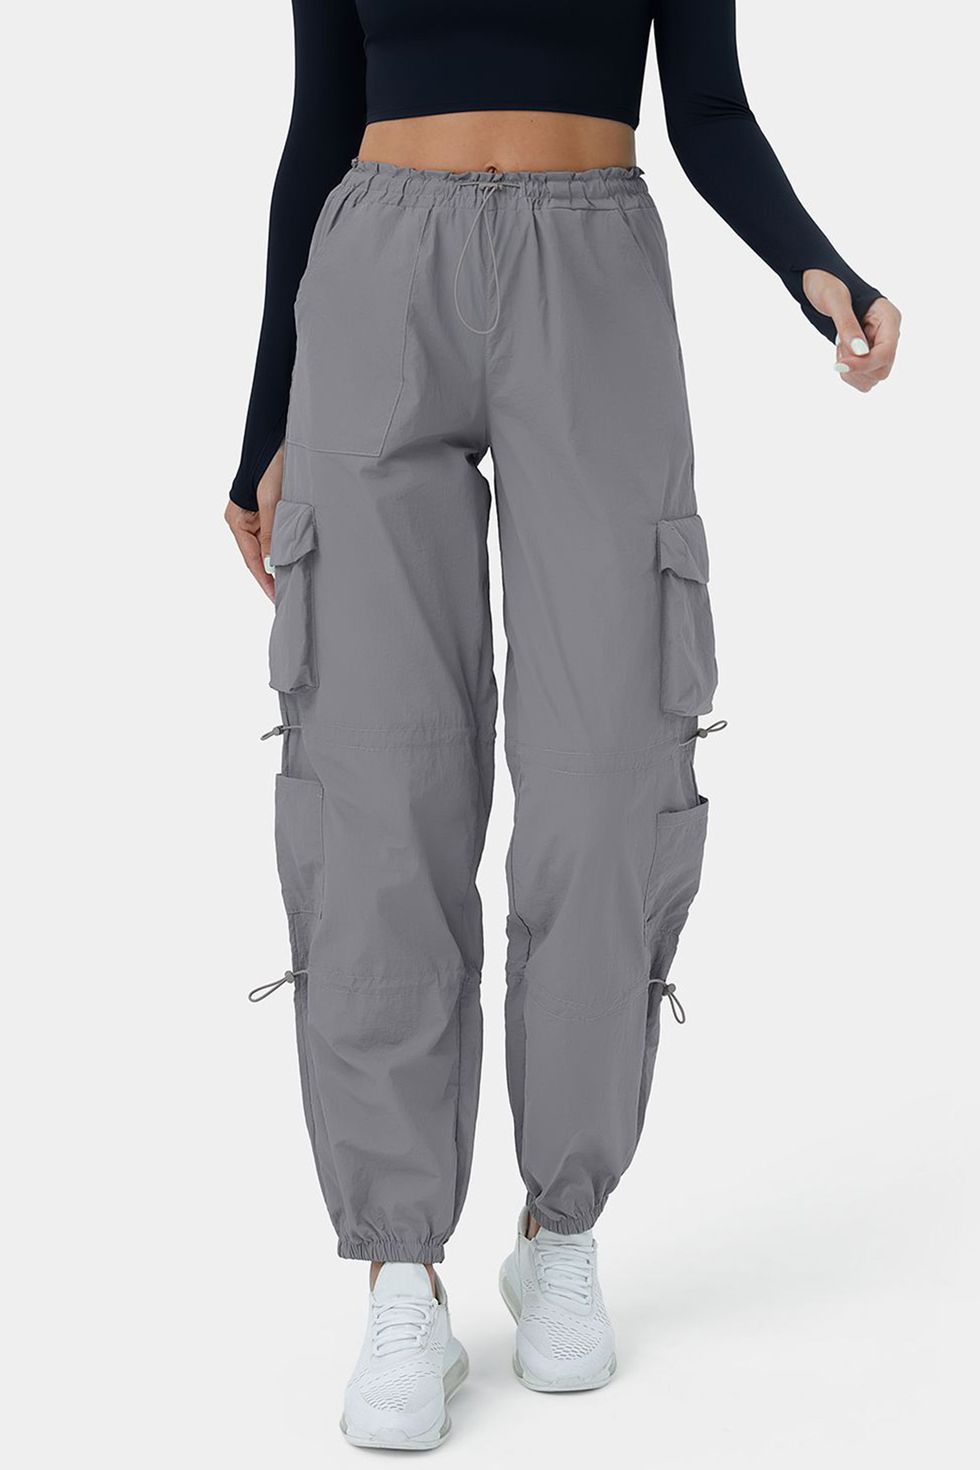 Cheap Grey Cargo Pants Women Drawstring Multi-pocket Overalls